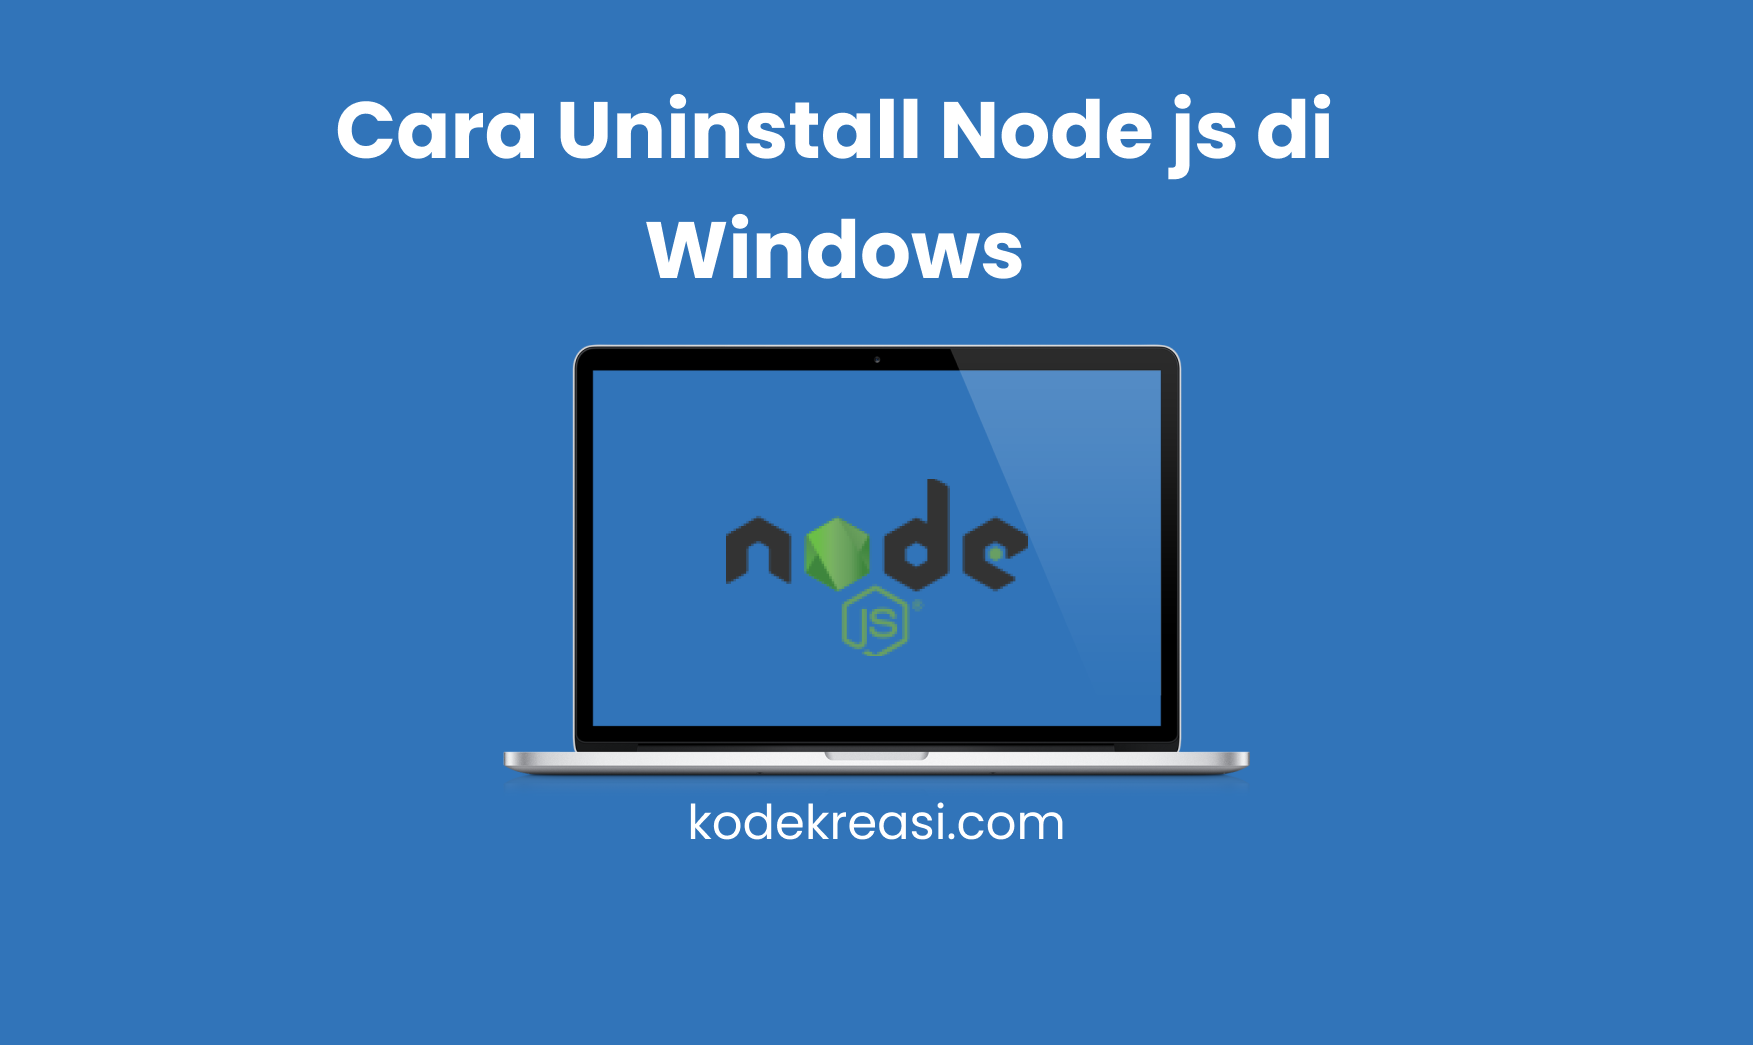 Cara uninstall node js di windows